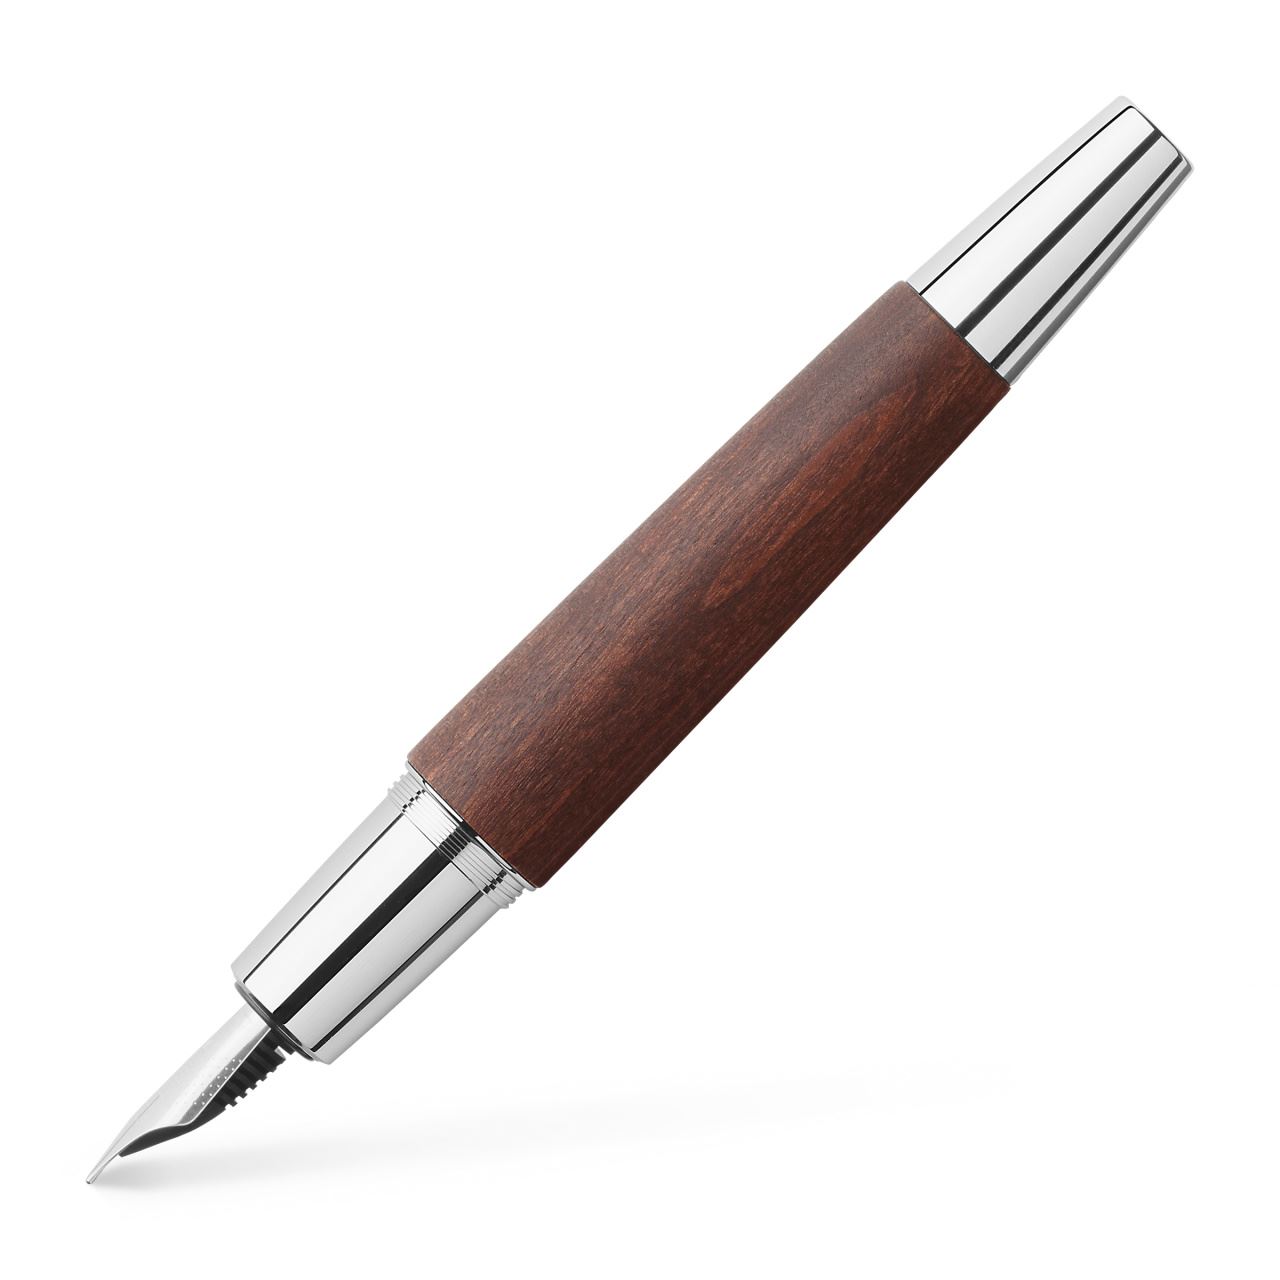 Faber-Castell - 德国辉柏嘉 设计尚品系列 高级镀铬深棕色梨木钢笔 F